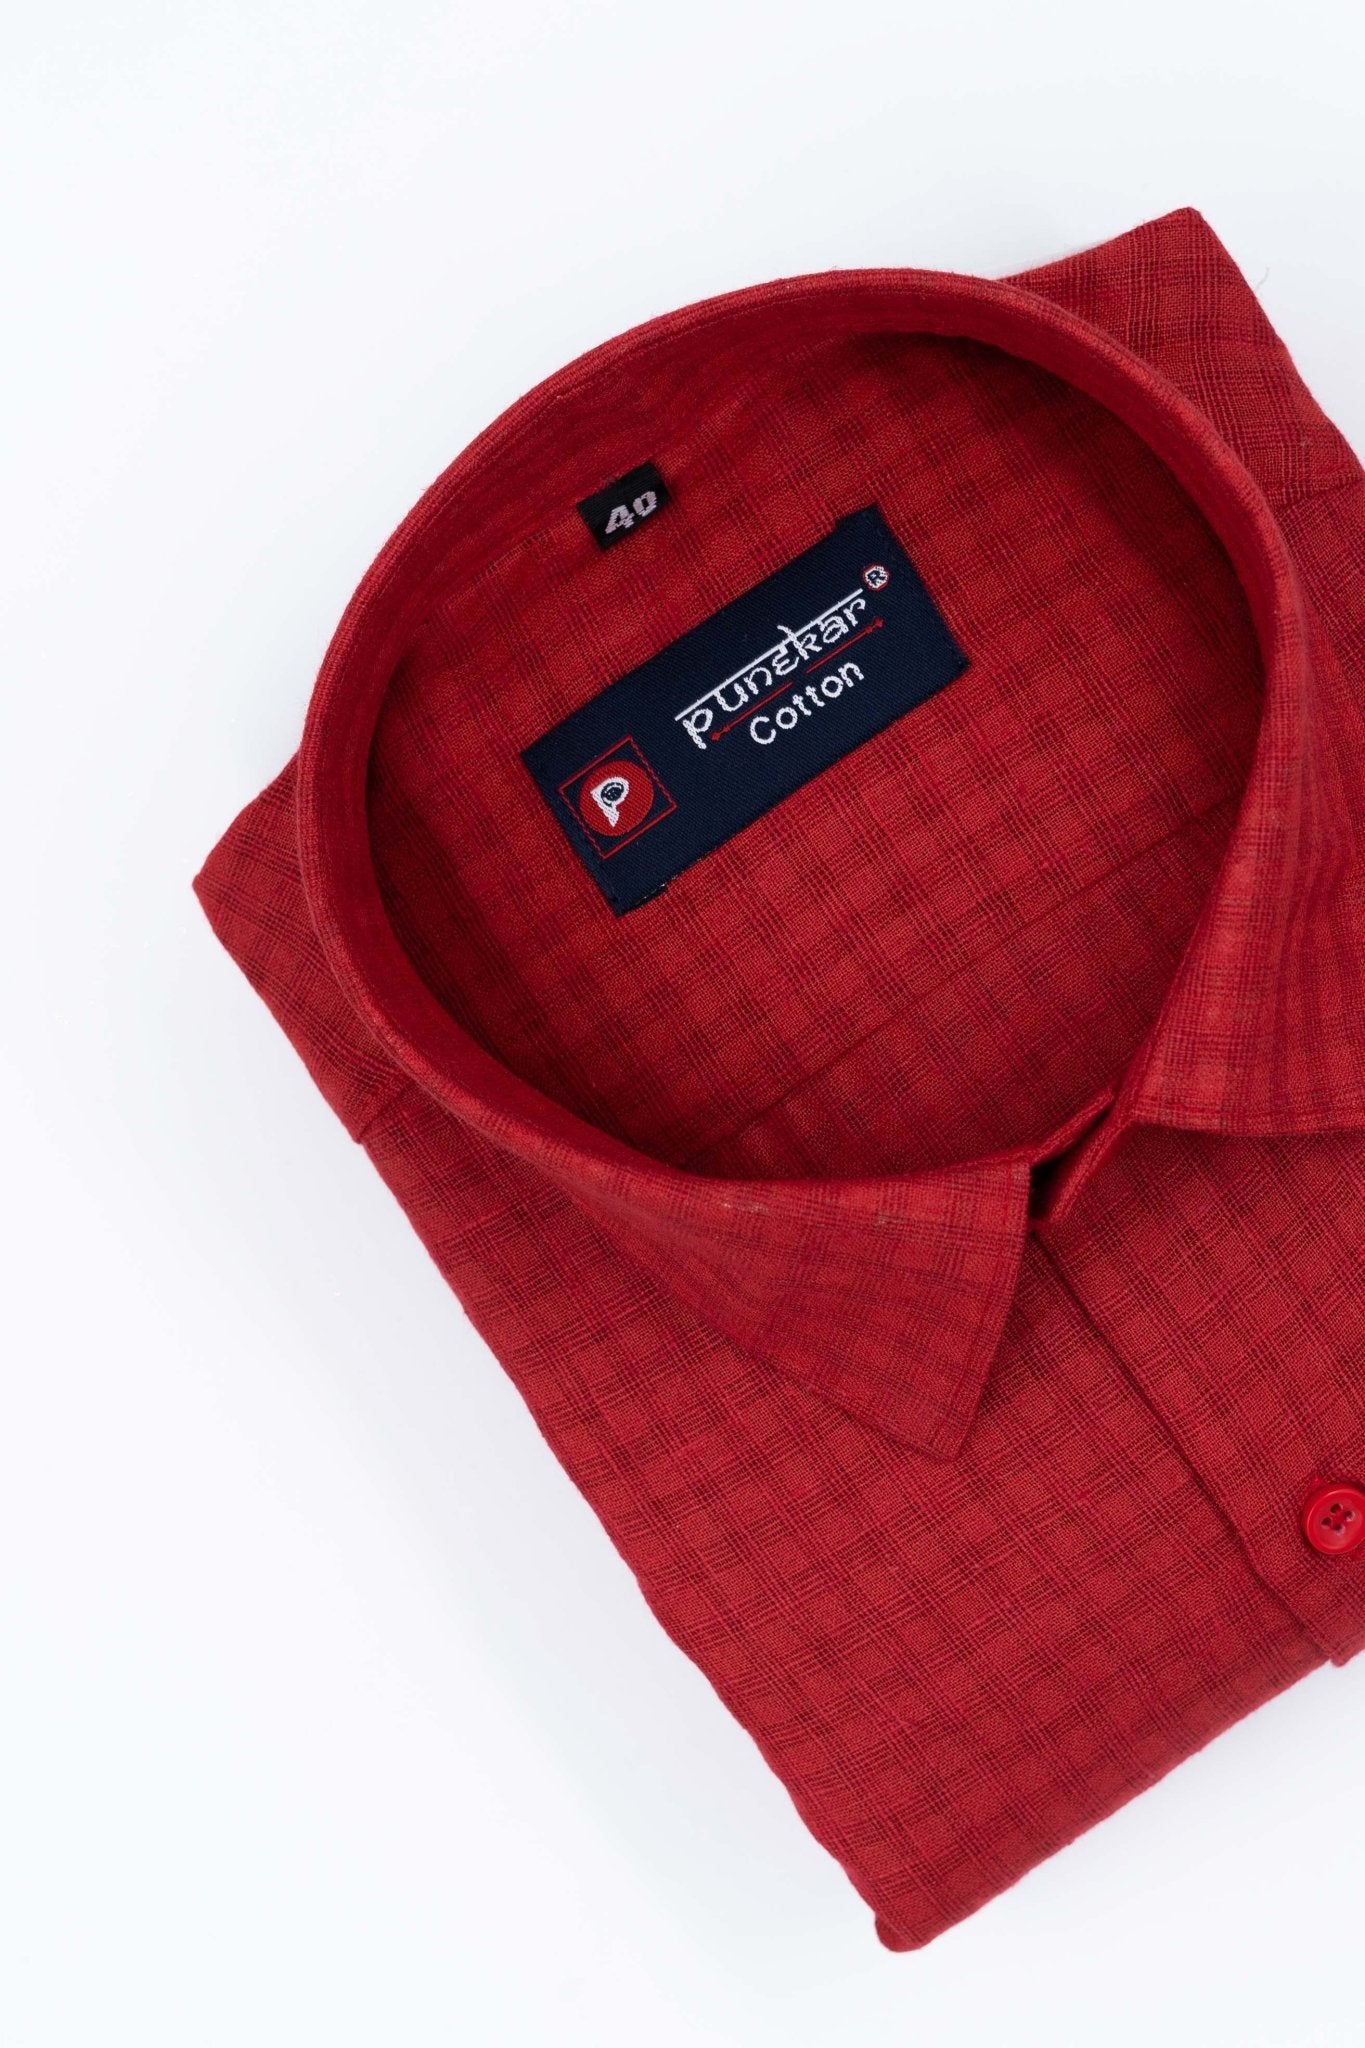 Red Color Cotton Self Woven Checks Handmade Shirts For Men&